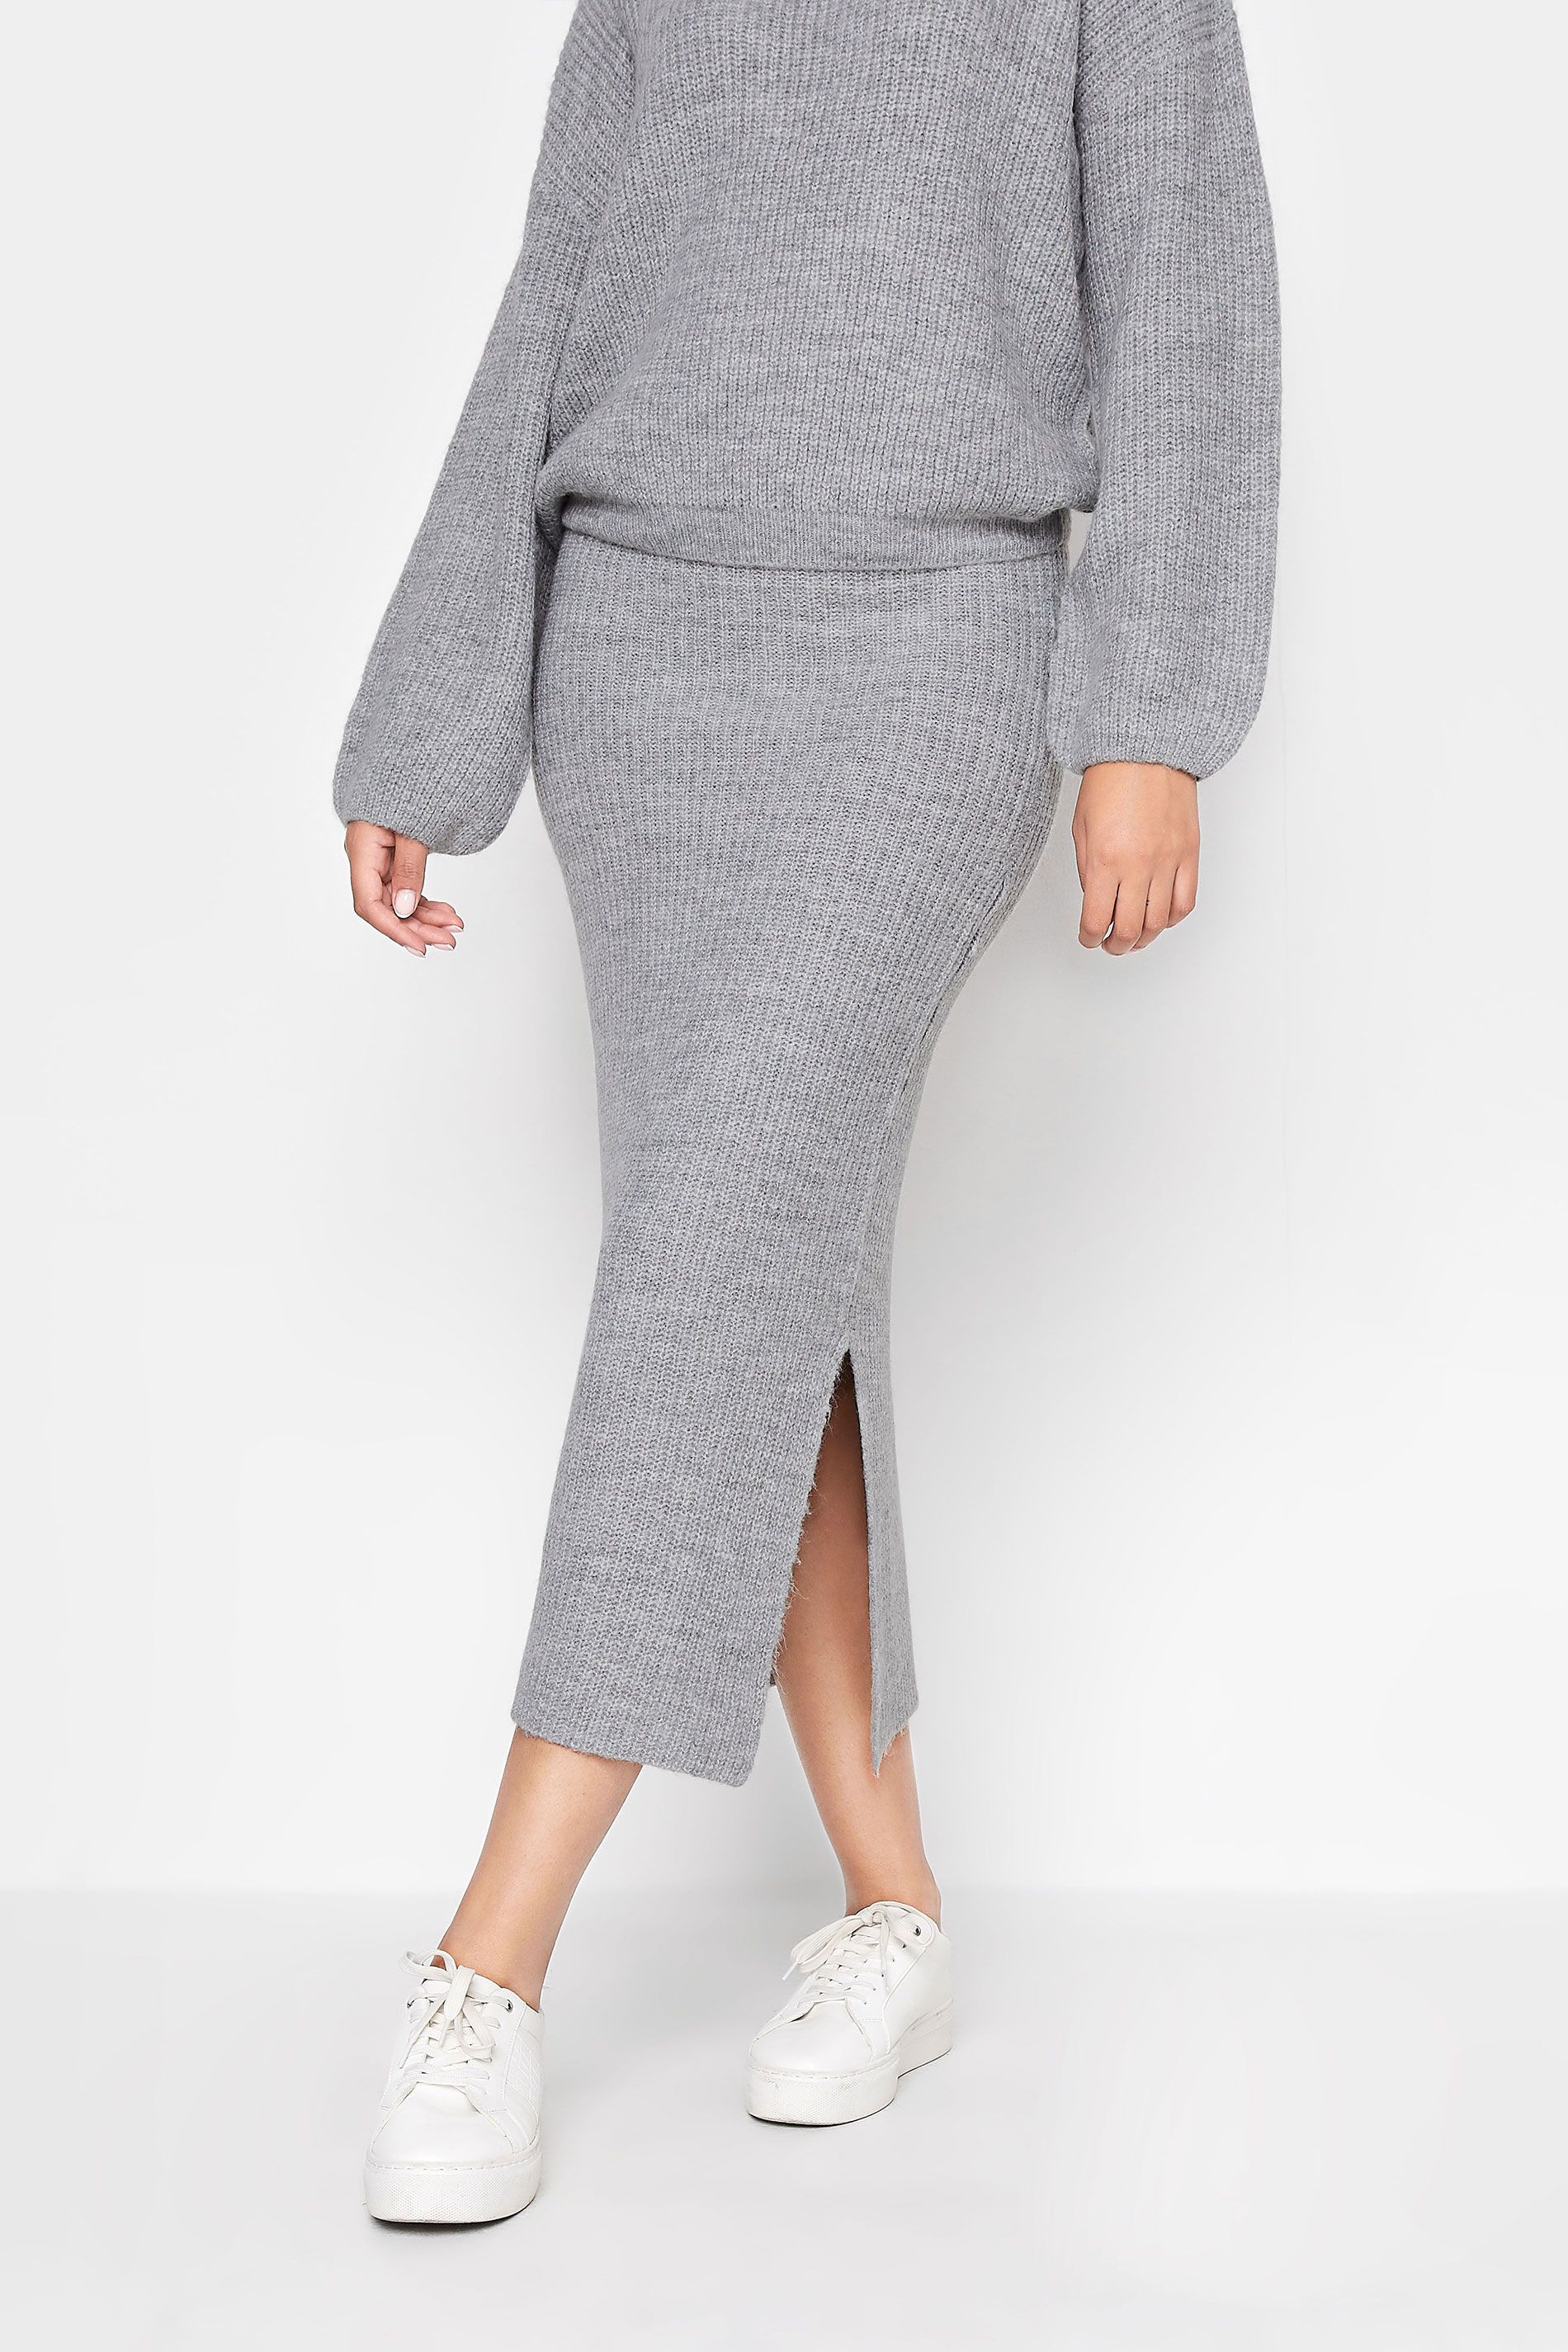 LTS Tall Grey Midi Knitted Skirt | Long Tall Sally